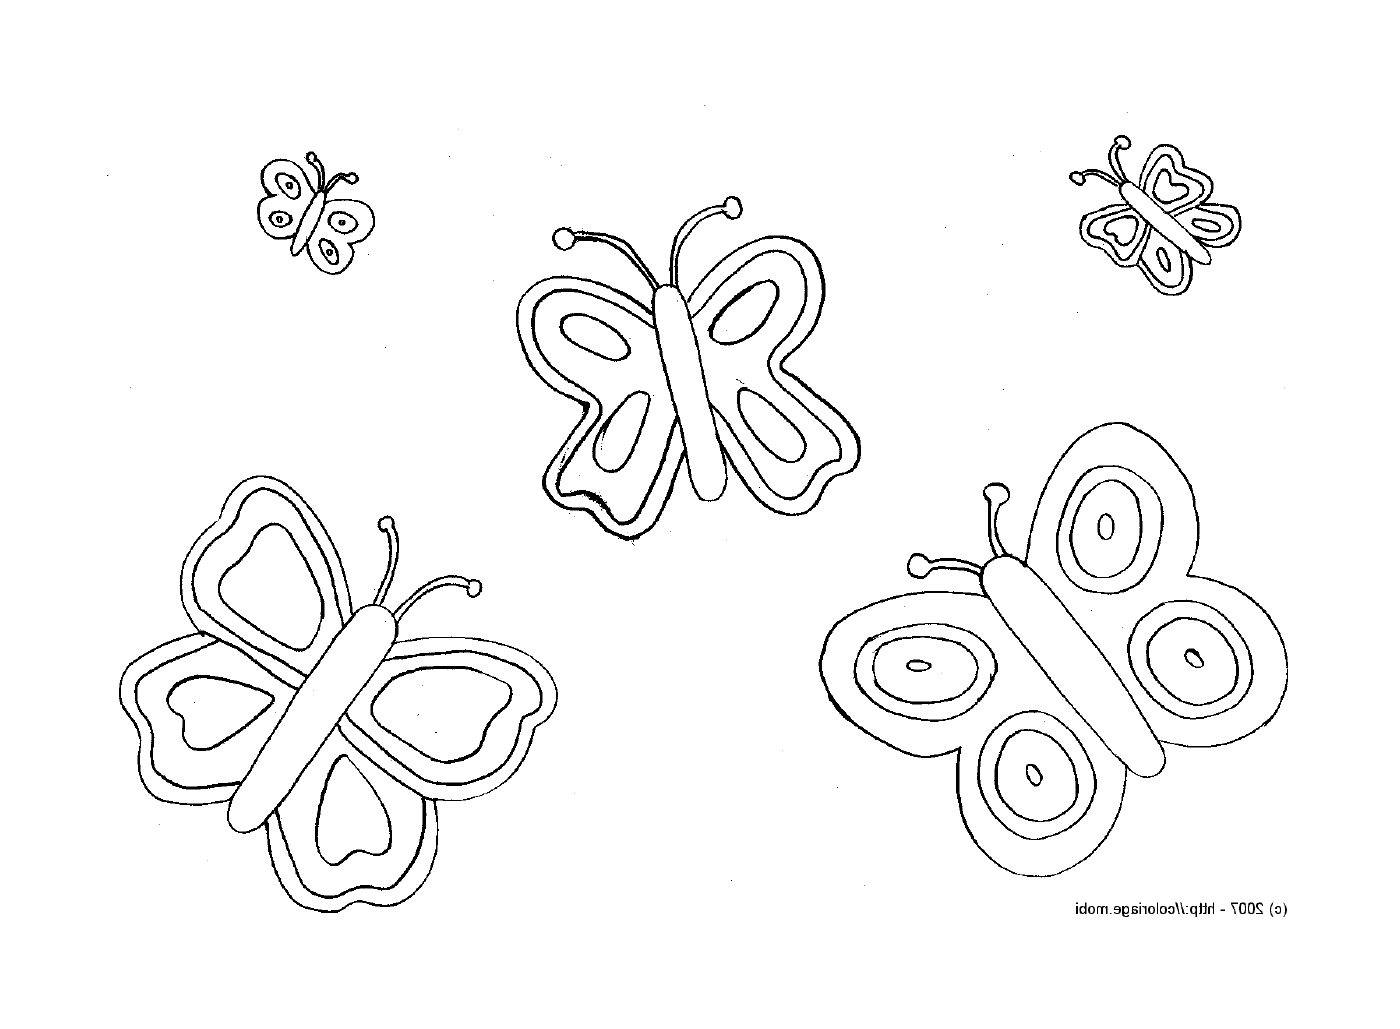  Zarter Schmetterling mit kräftigen Mustern 